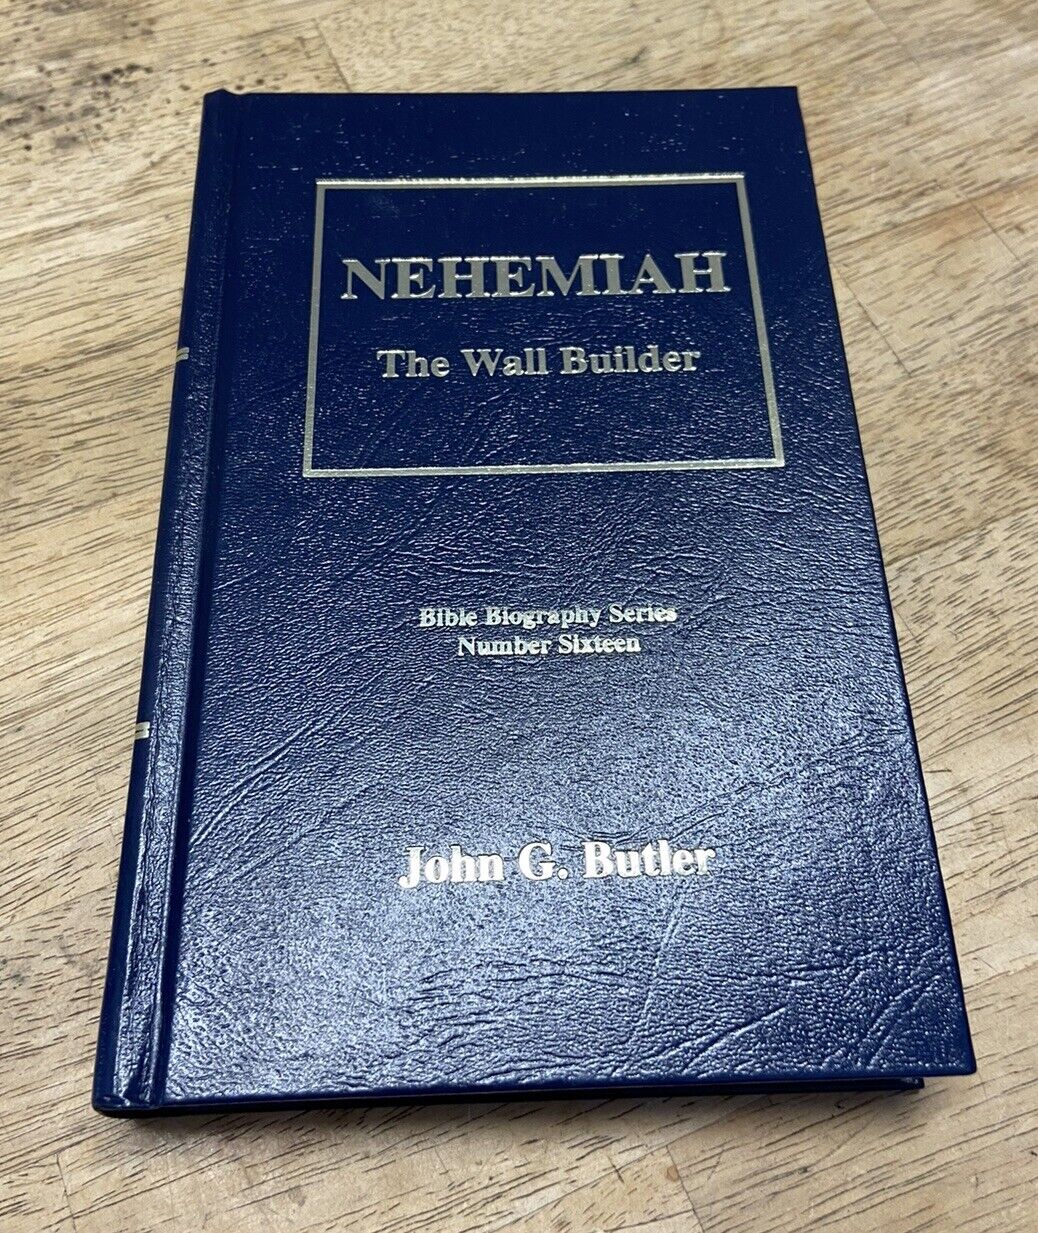 Nehemiah : The Wall Builder by John G. Butler (1998, Hardcover) Bible Biography